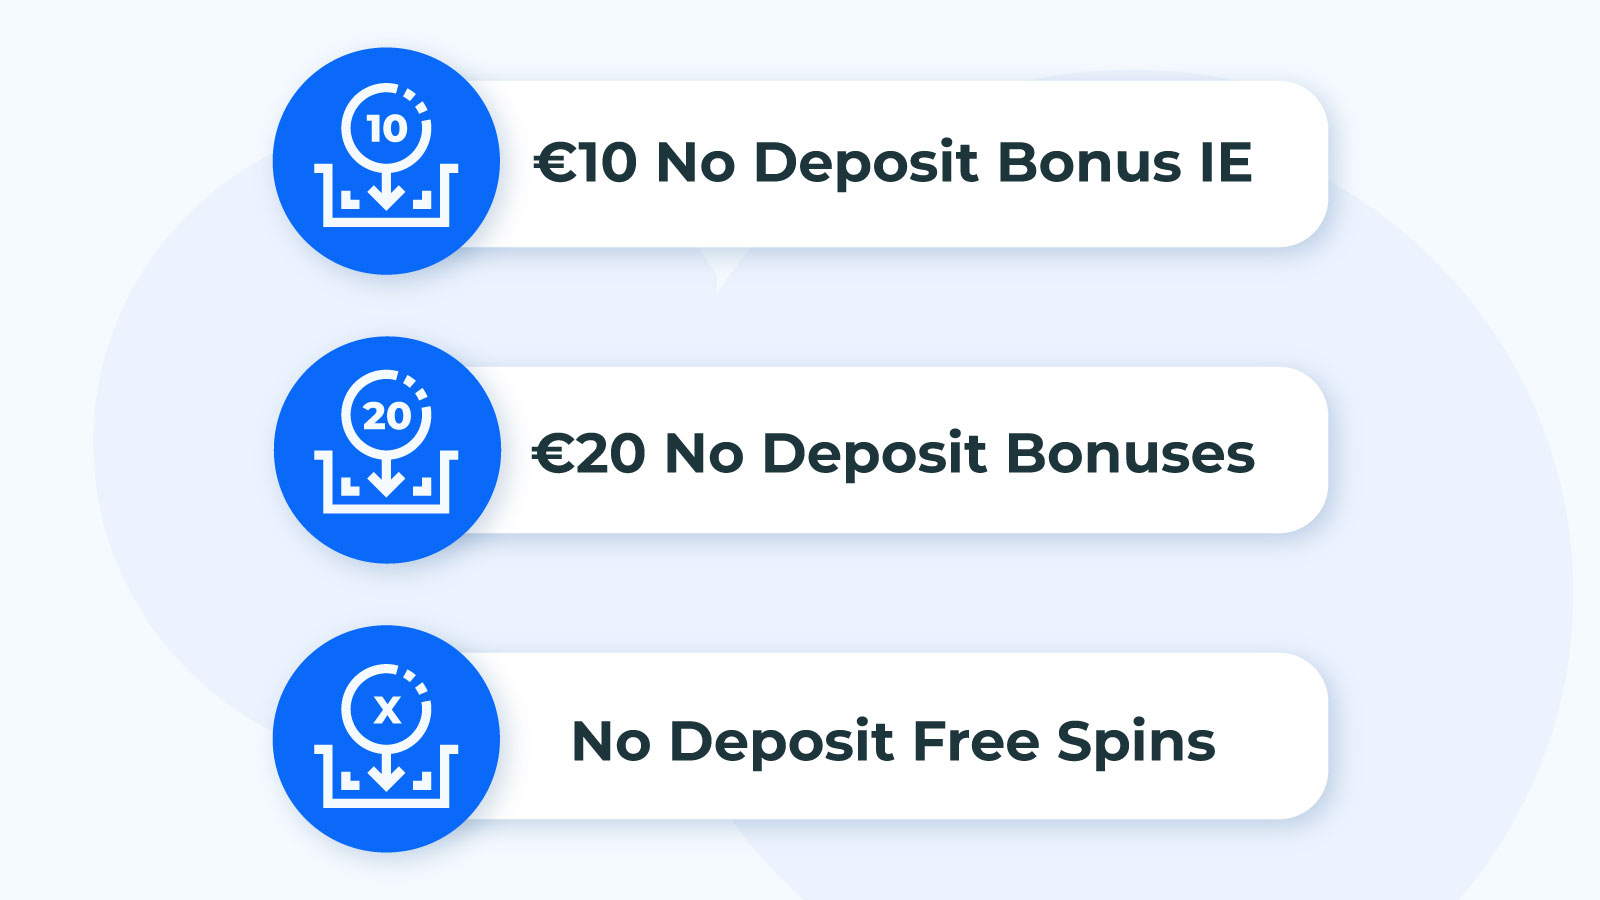 Other No Deposit Bonuses in IE Online Casinos